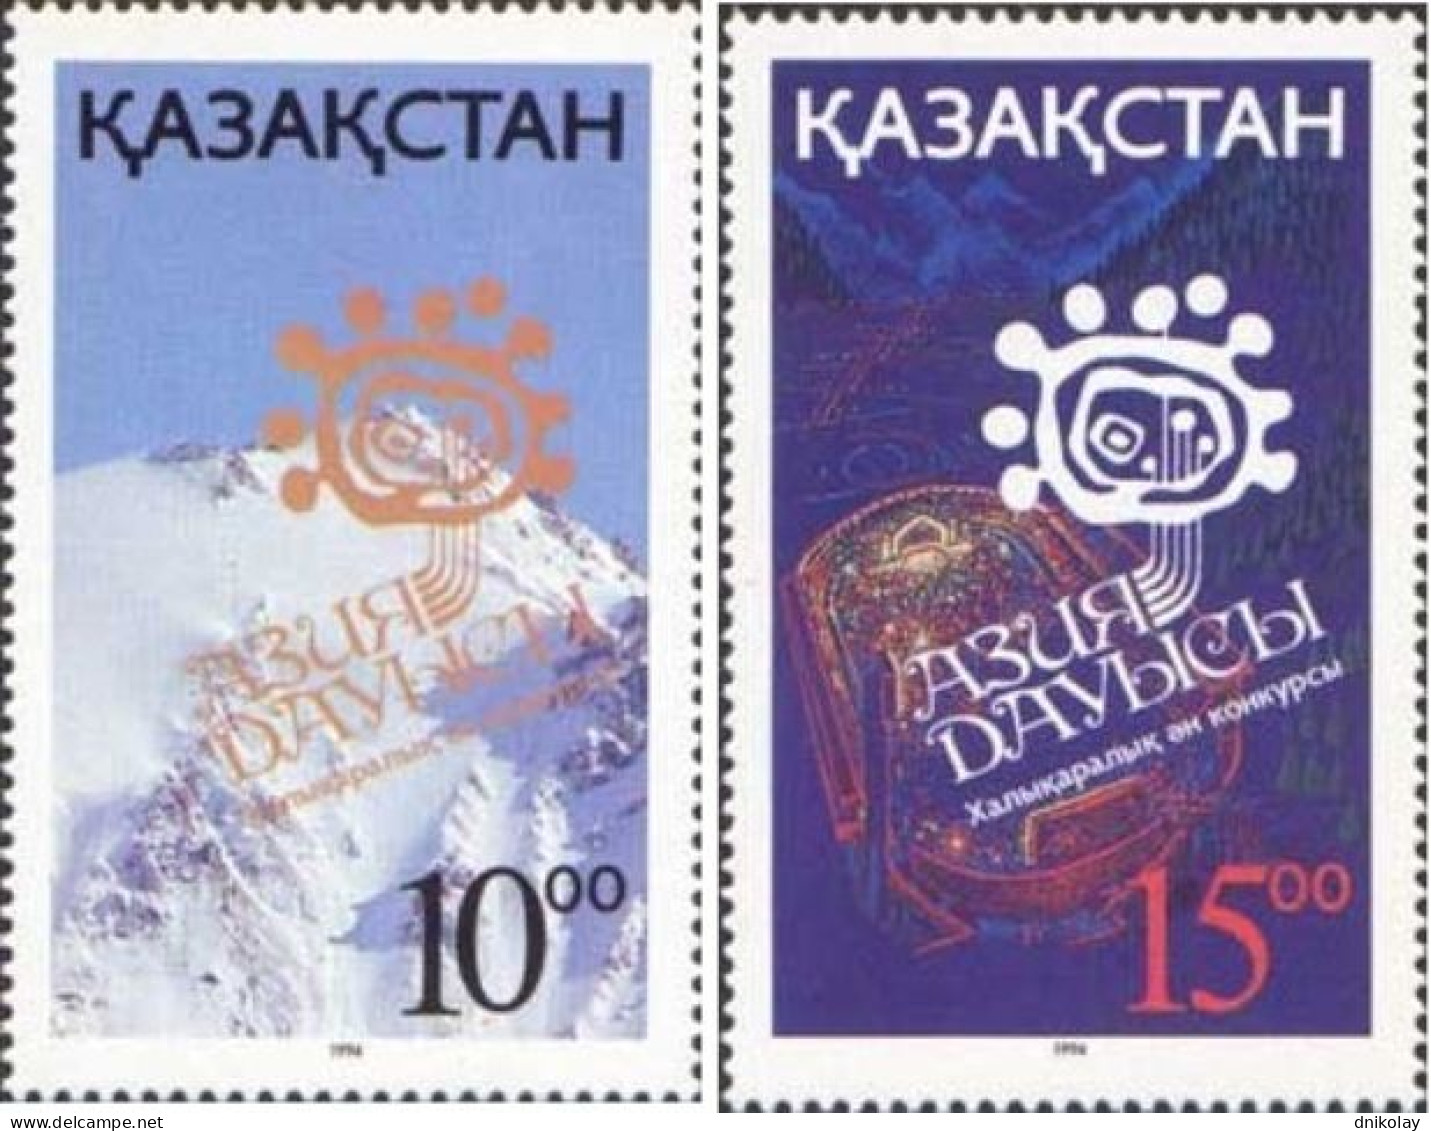 1994 53 Kazakhstan The 5th "Asia Dauysy" International Music Festival, Almaty MNH - Kasachstan